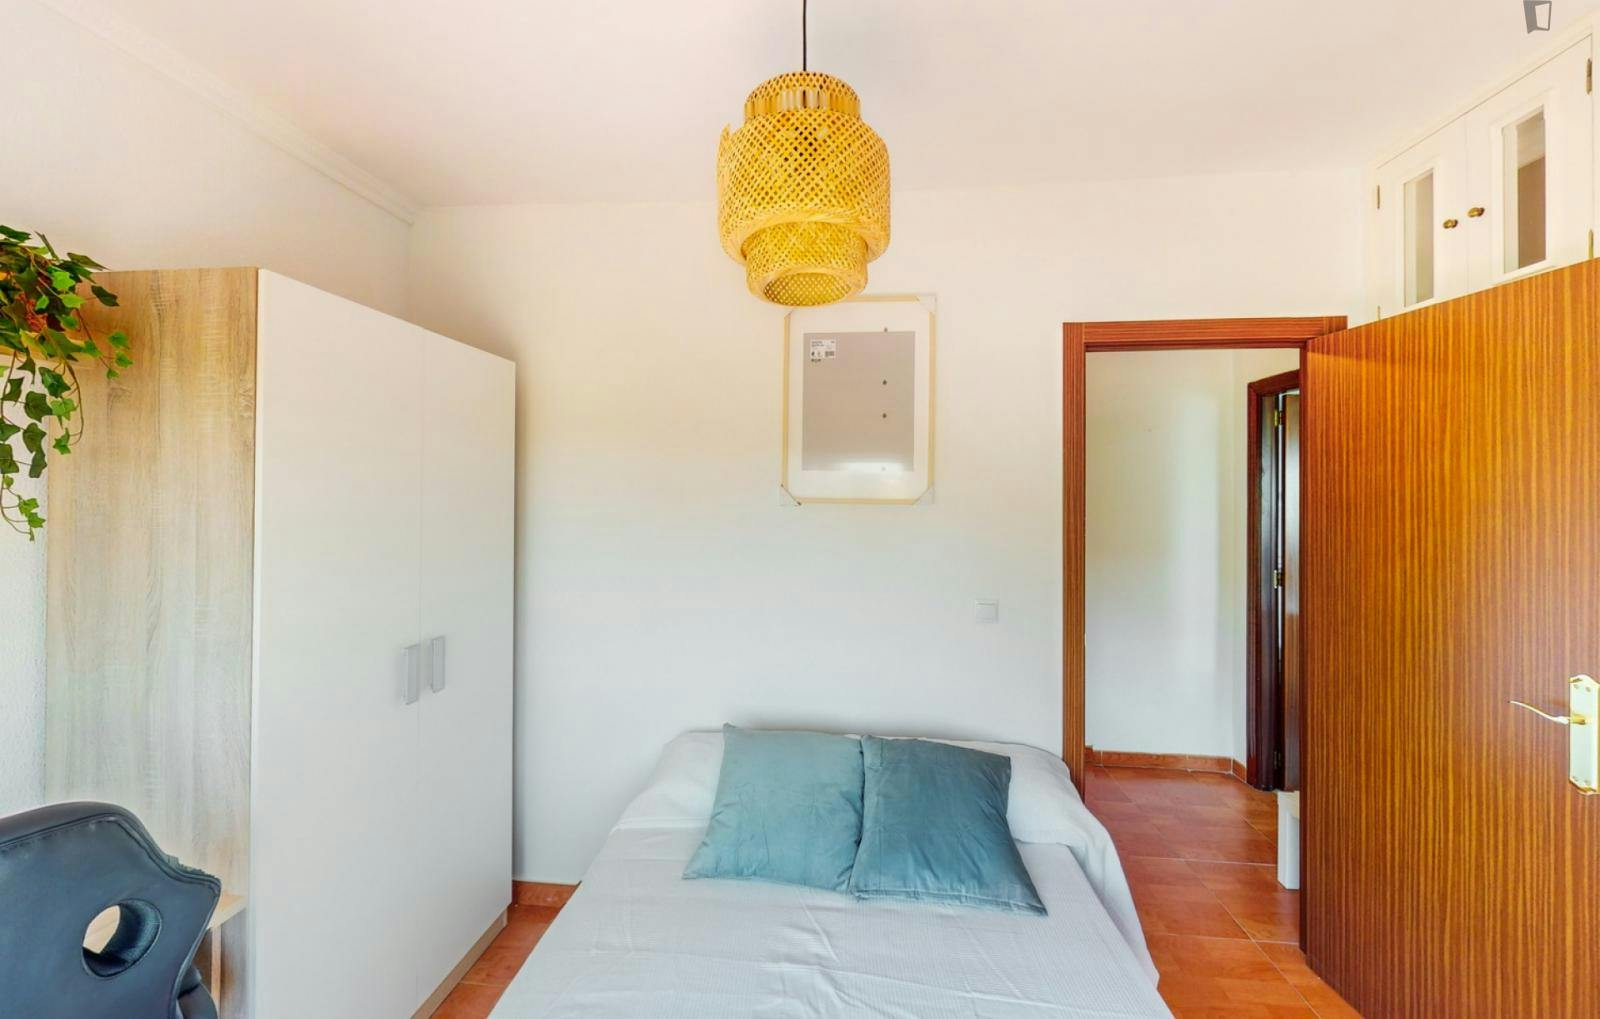 Appealing single bedroom with balcony